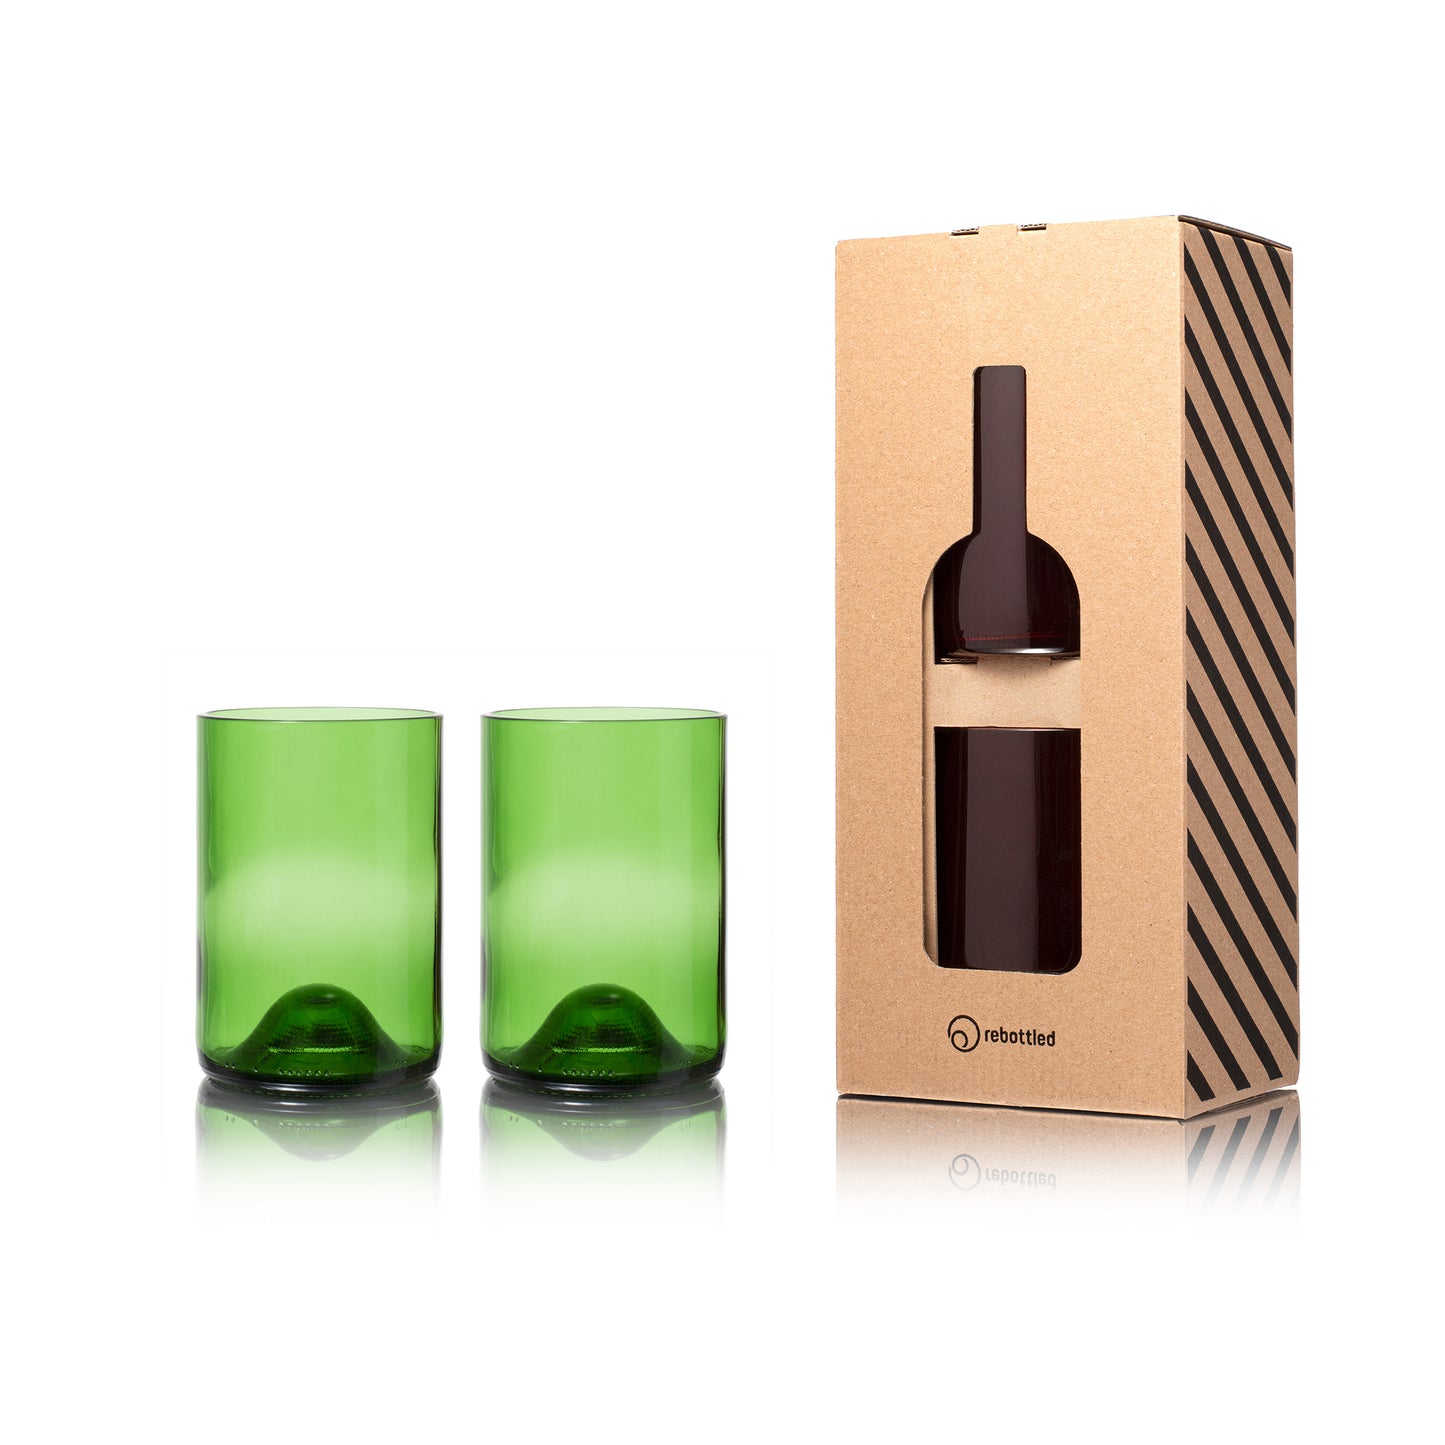 Rebottled sustainable drinking glasses green